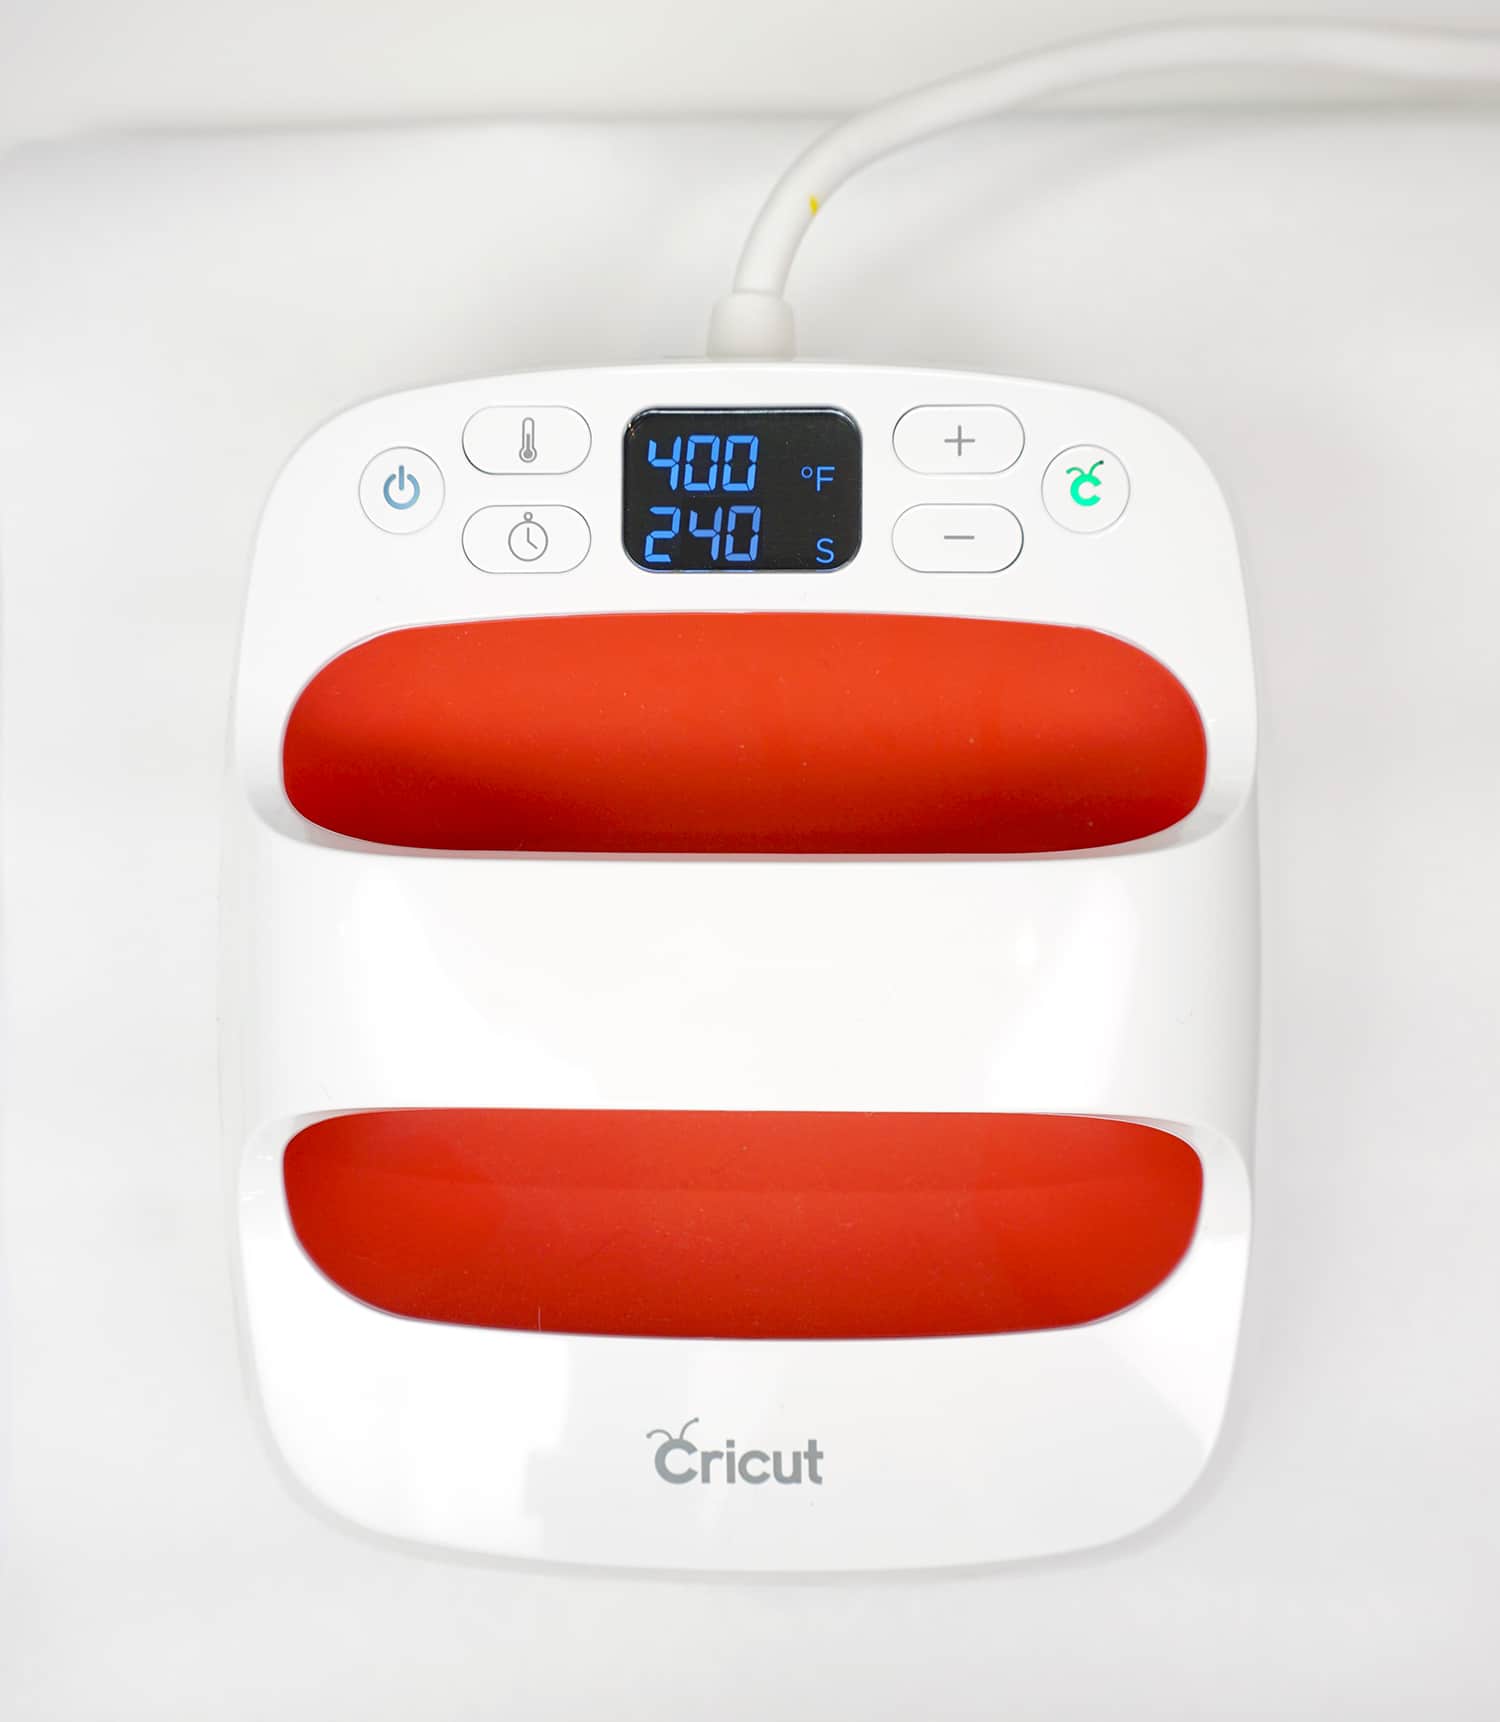 cricut easy press with heat settings 